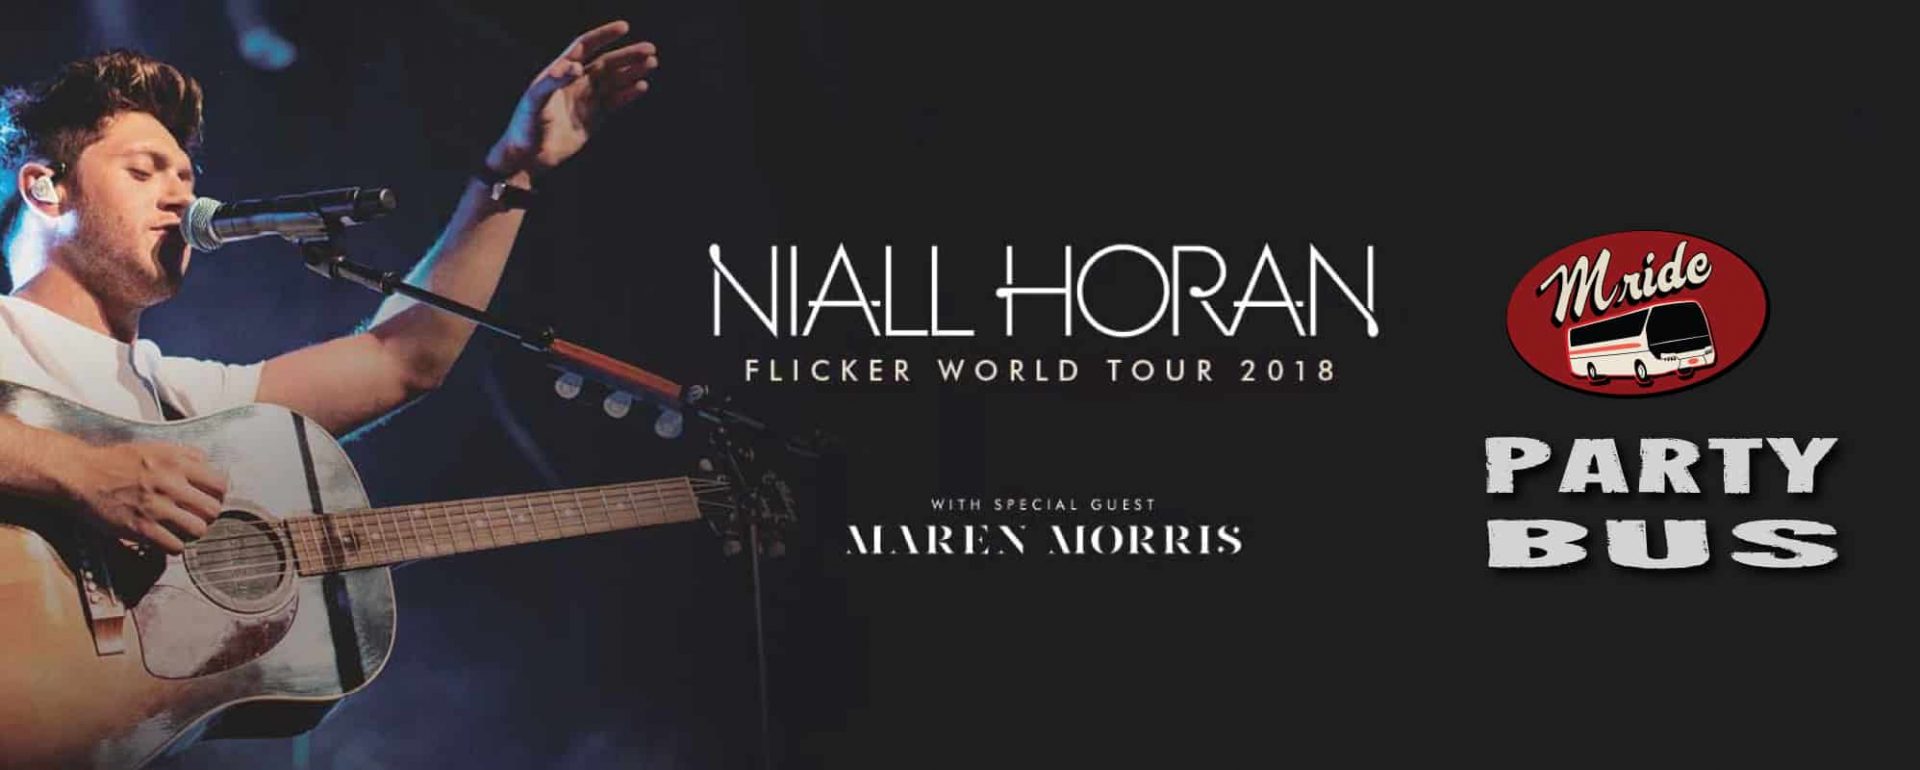 Niall Horan Flicker World Tour 2018